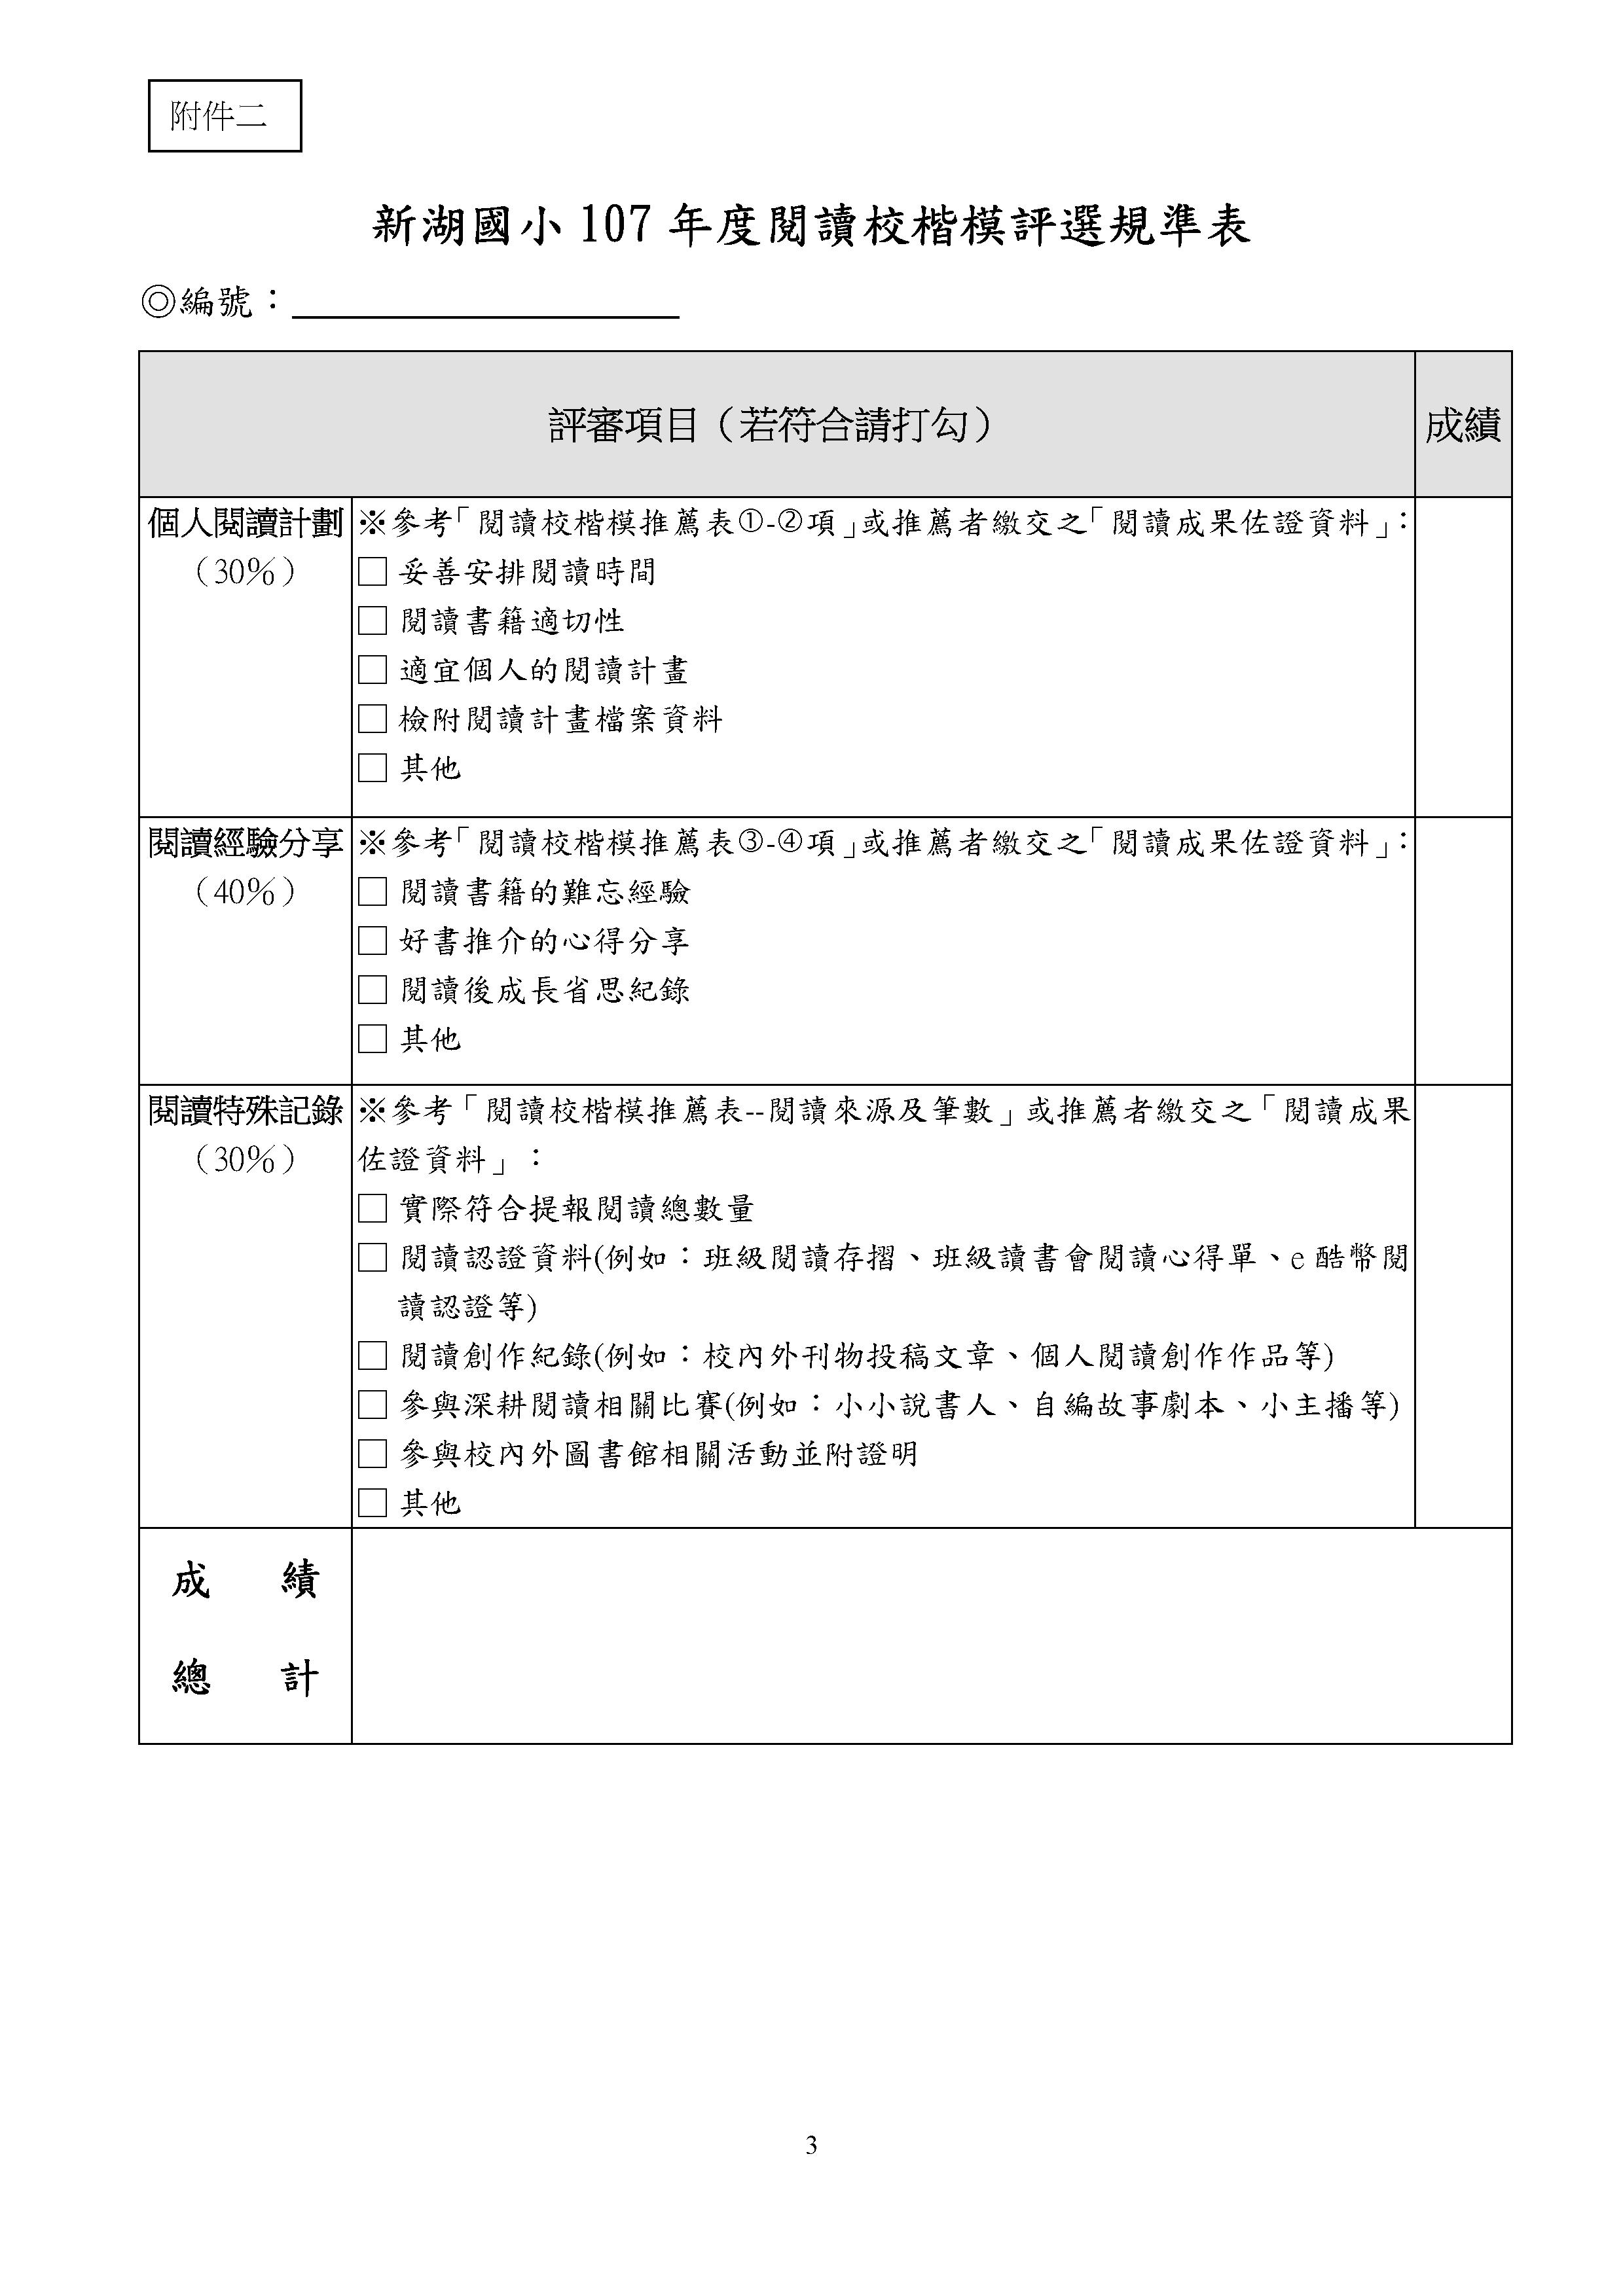 Microsoft Word - 107新湖國小閱讀校楷模計畫0002.jpeg